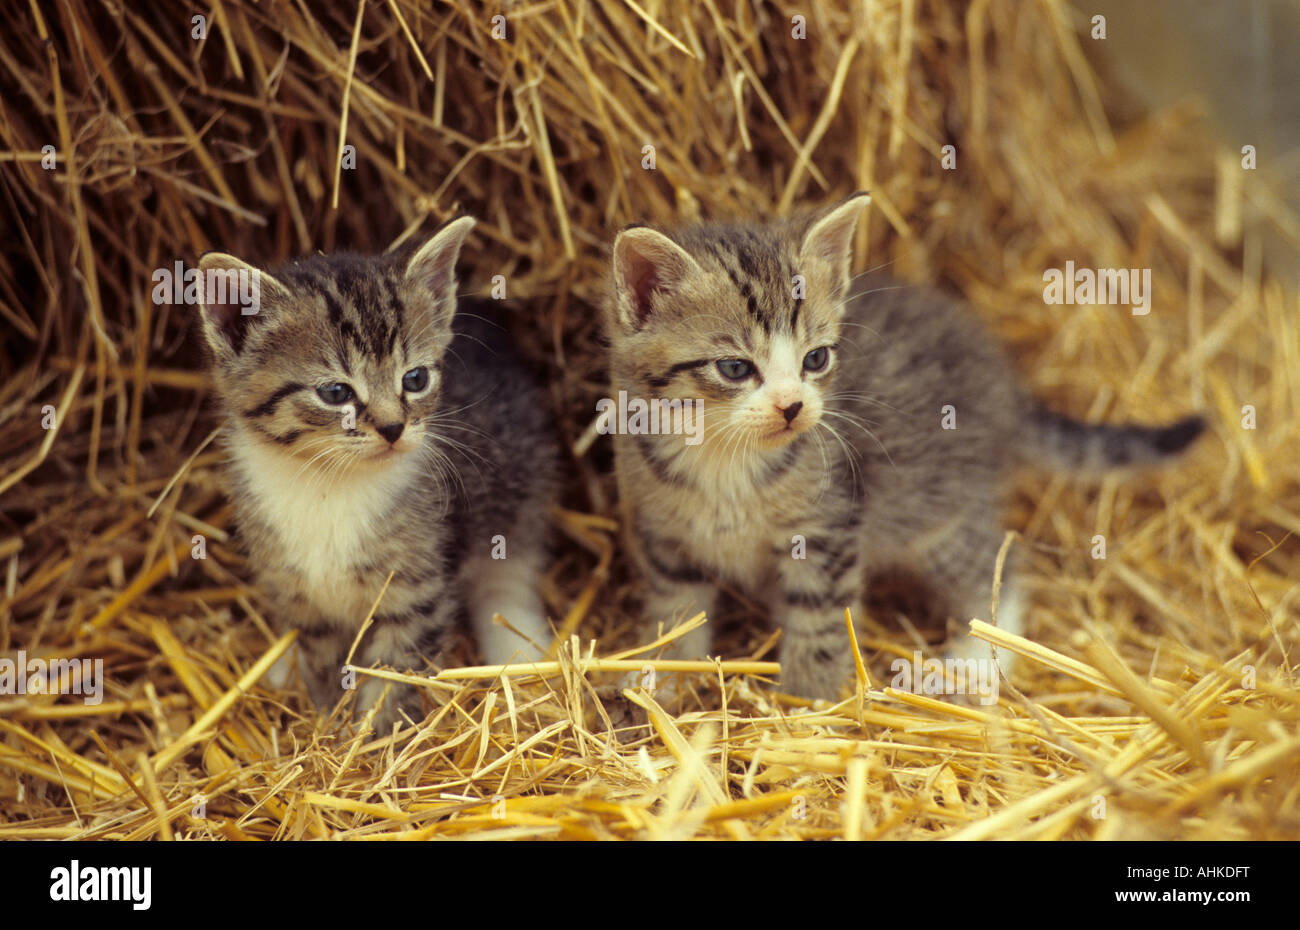 zwei junge Hauskatzen im Stroh two young domestic cats in straw Stock Photo